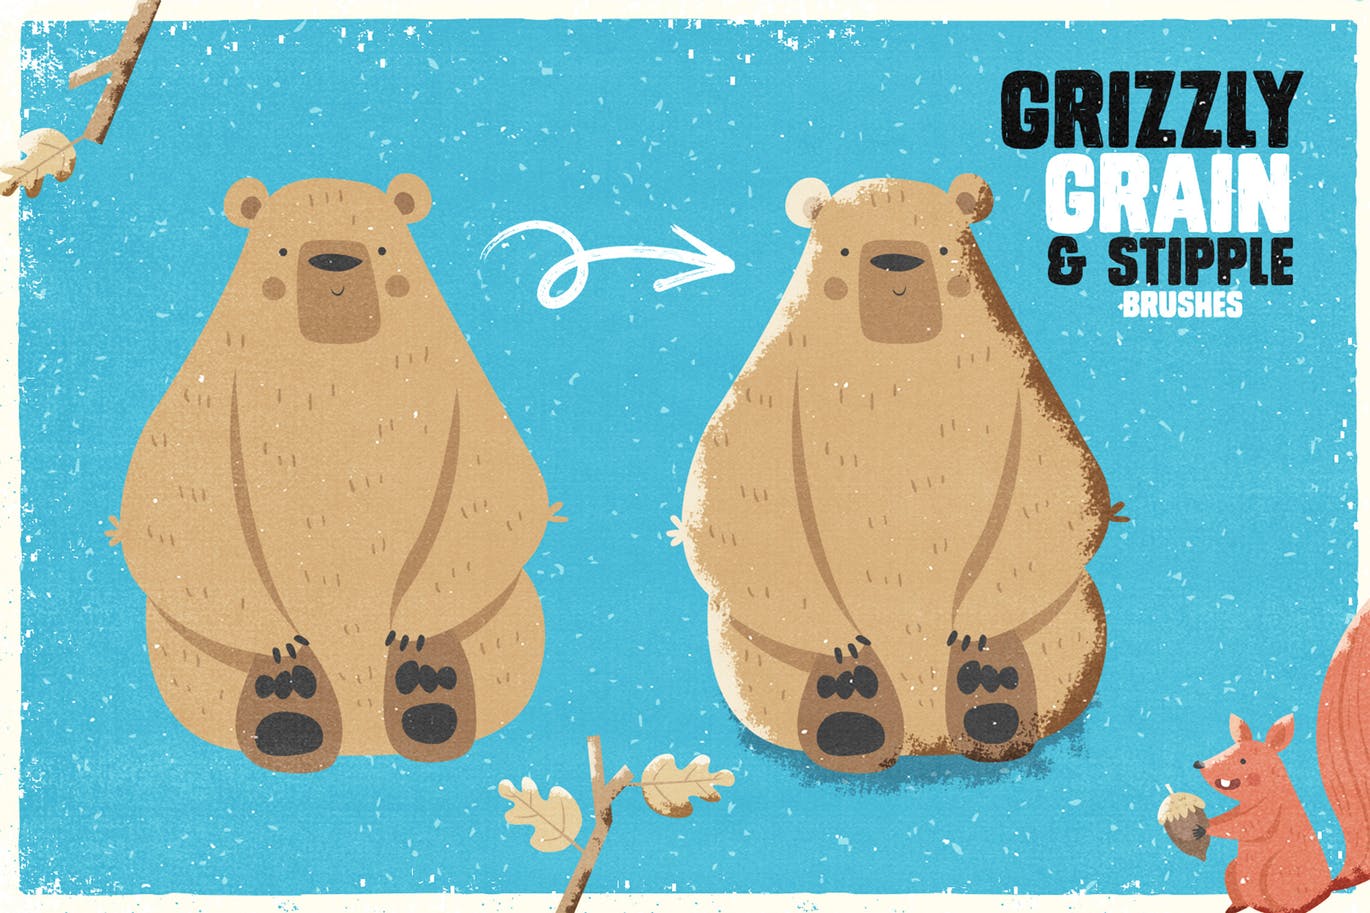 手绘设计师必备-流行的仿旧阴影效果点画创作PS笔刷第一素材精选 Grizzly Grain & Stipple Shader Brushes插图(1)